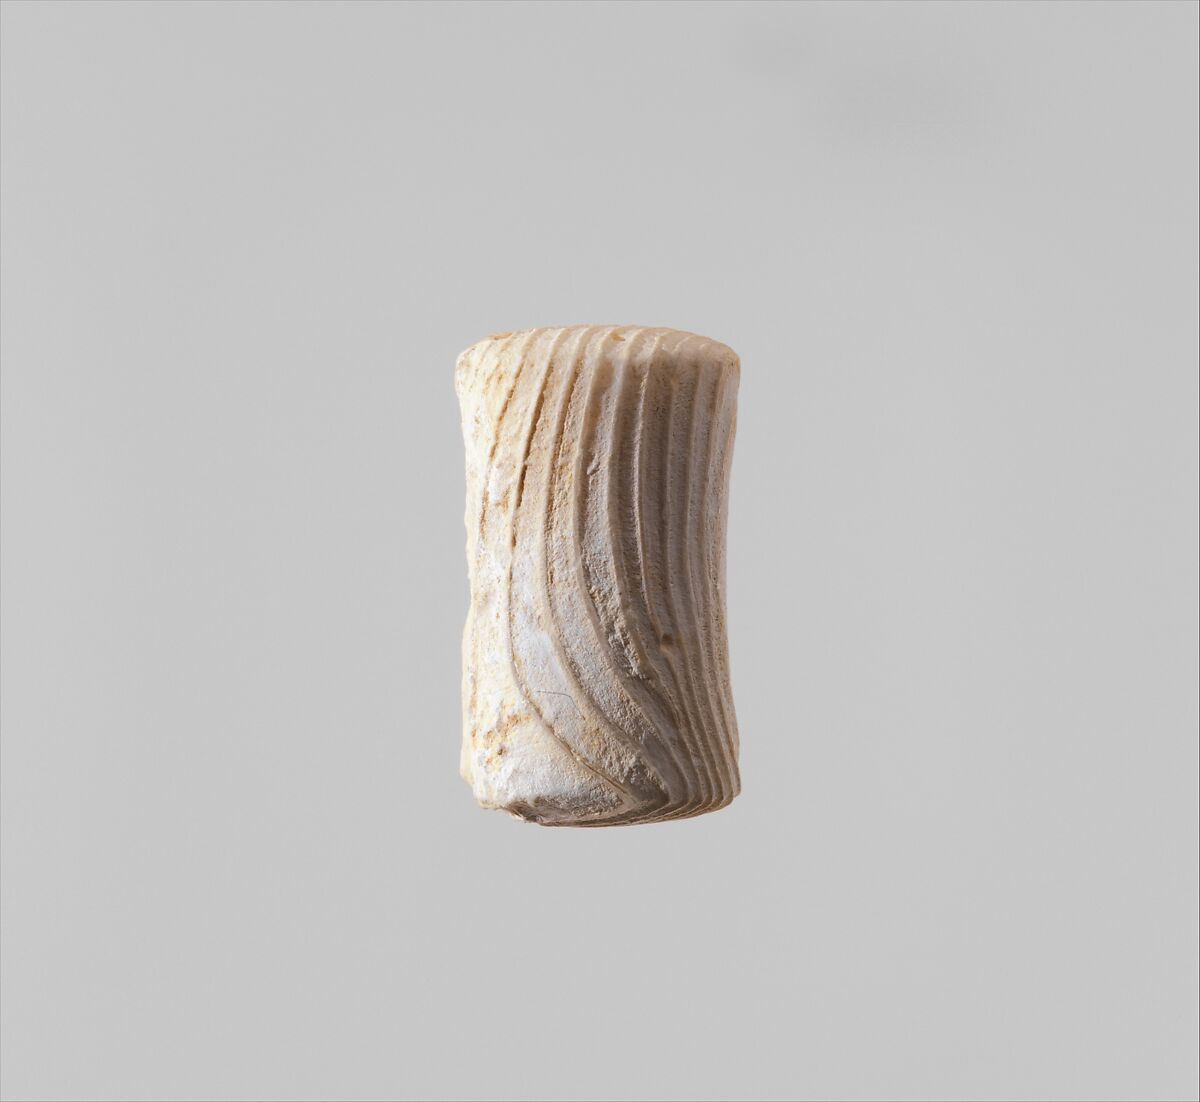 Shell pestle/polisher, Spondylus shell (aragonite), Cycladic 